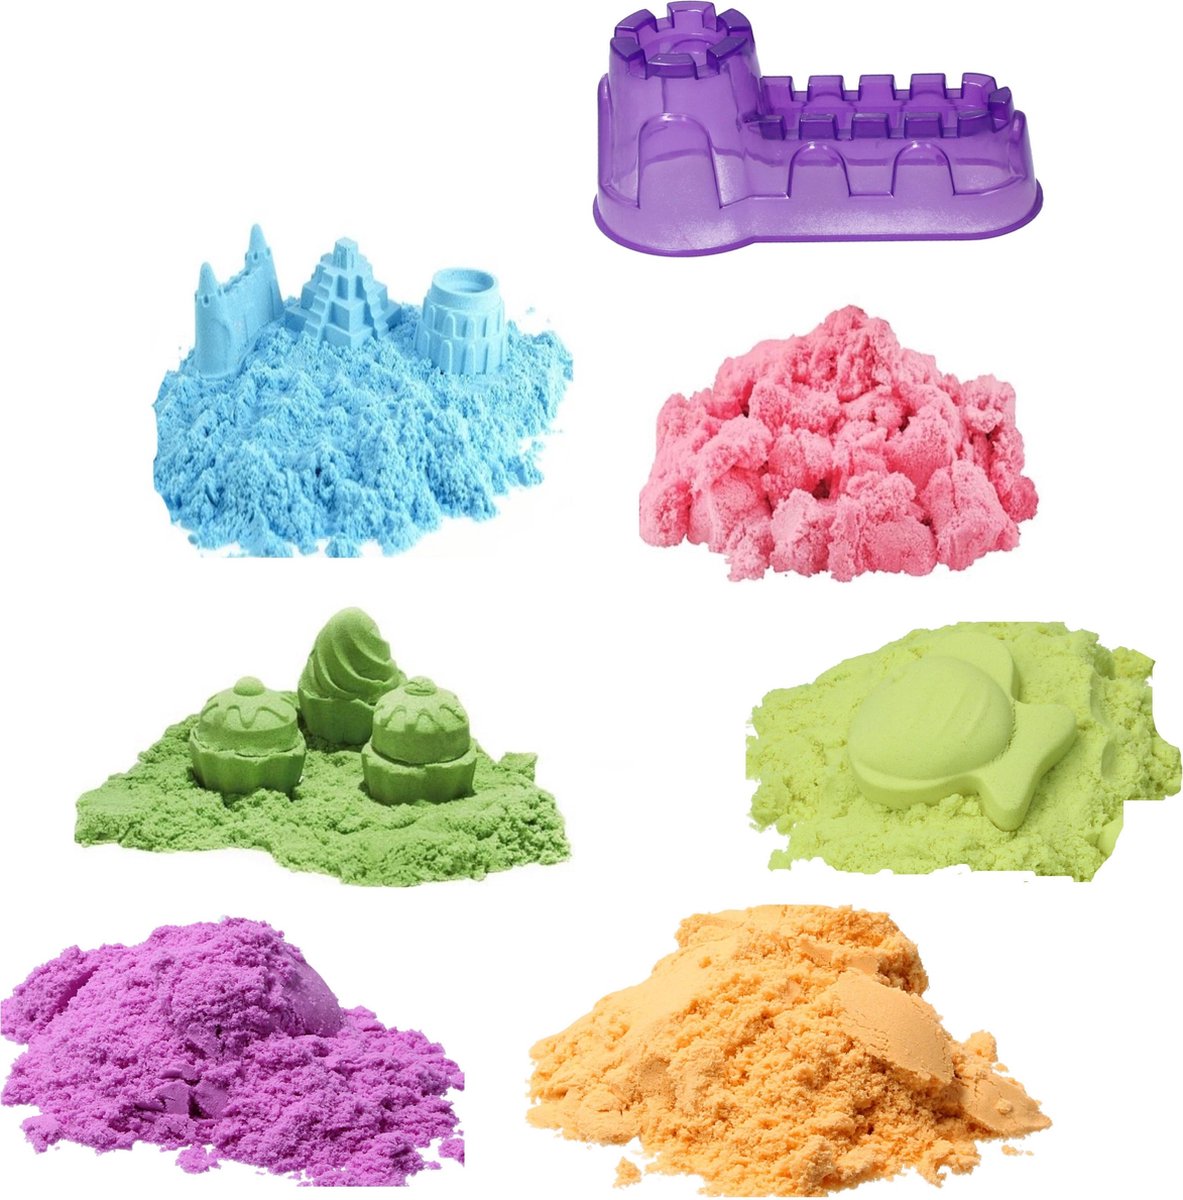 Banzaa Speelzand Bewegend Modelleer Zand Multi kleur Set 3 Kilo Incl. kasteel Vorm